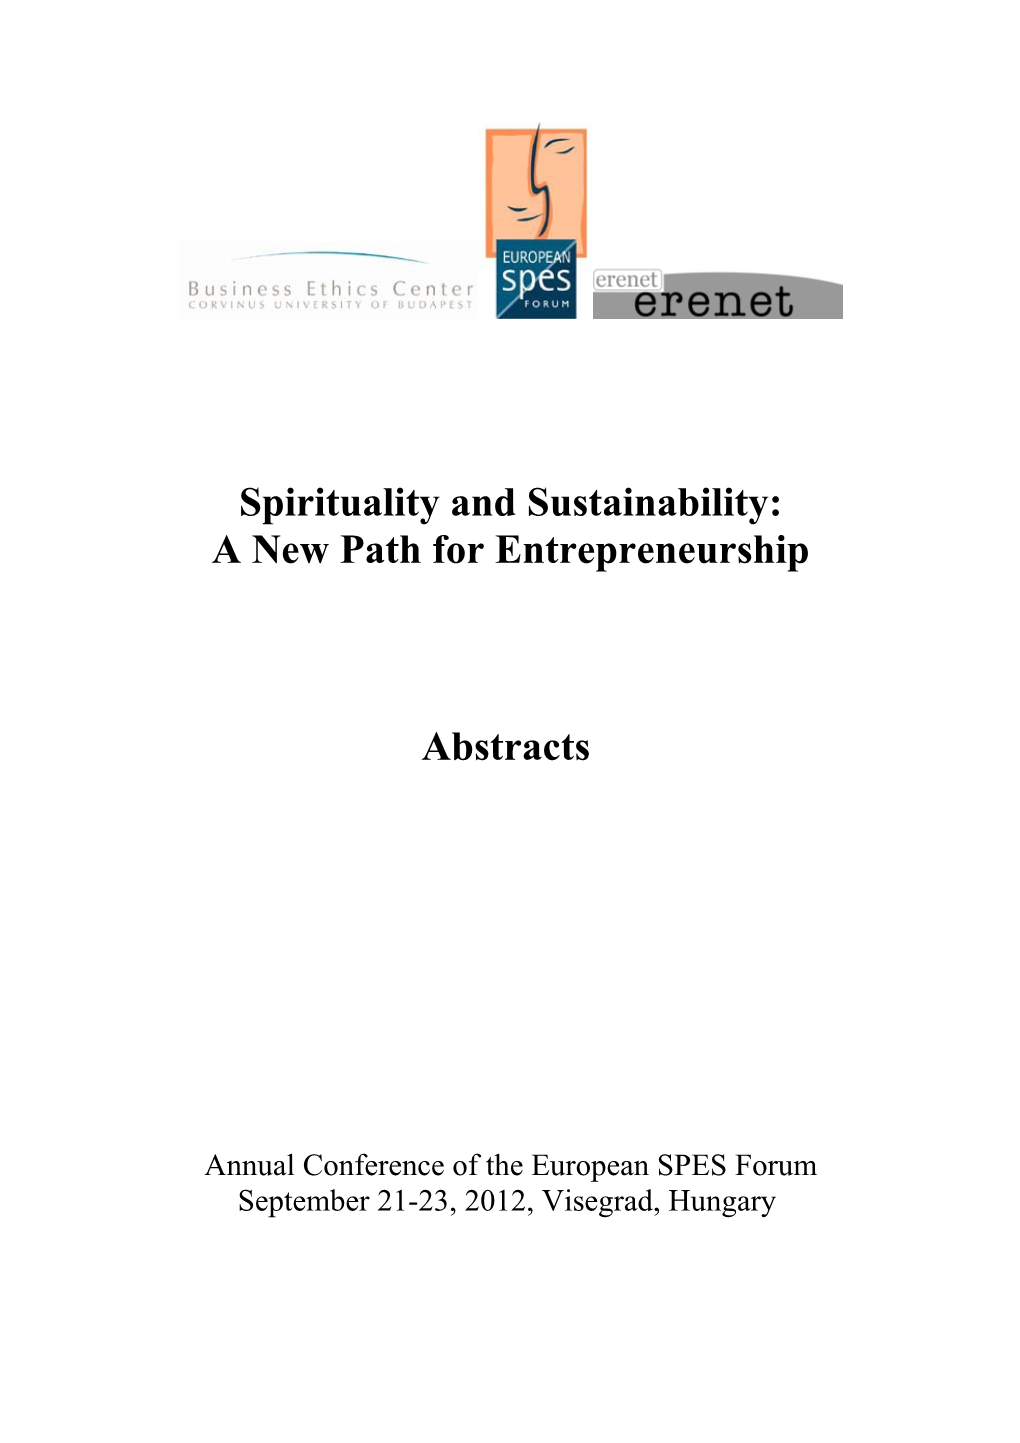 A New Path for Entrepreneurship